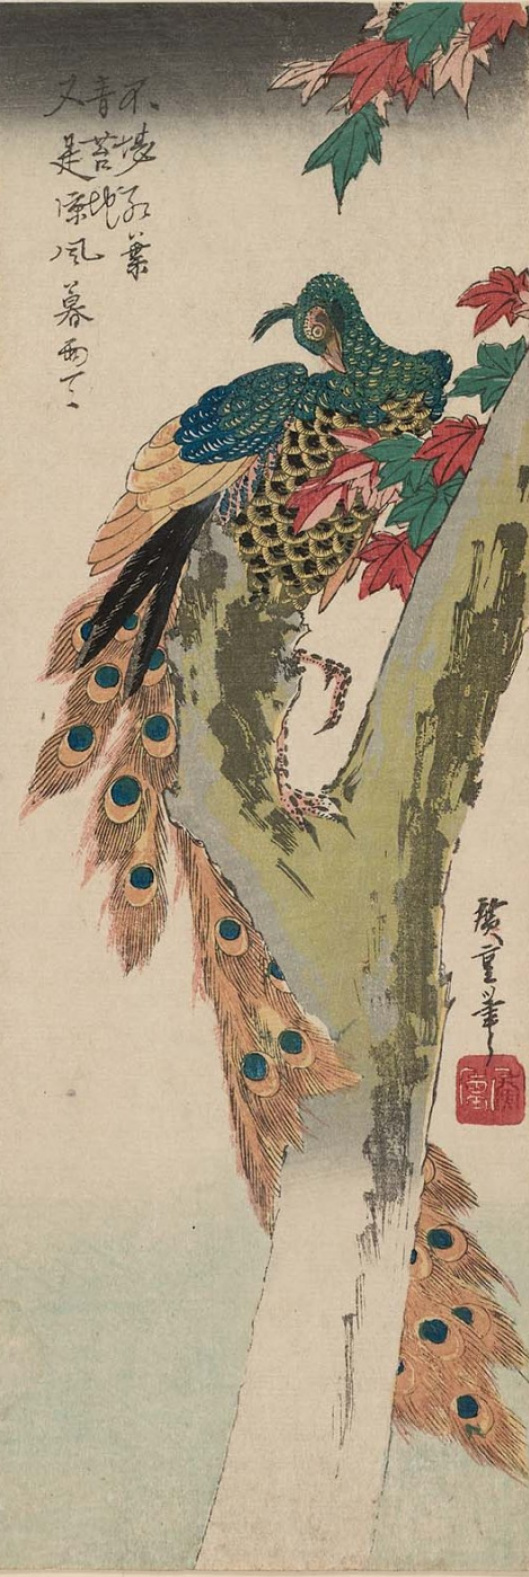 Utagawa Hiroshige. Peacock and maple. Series "Birds and flowers"